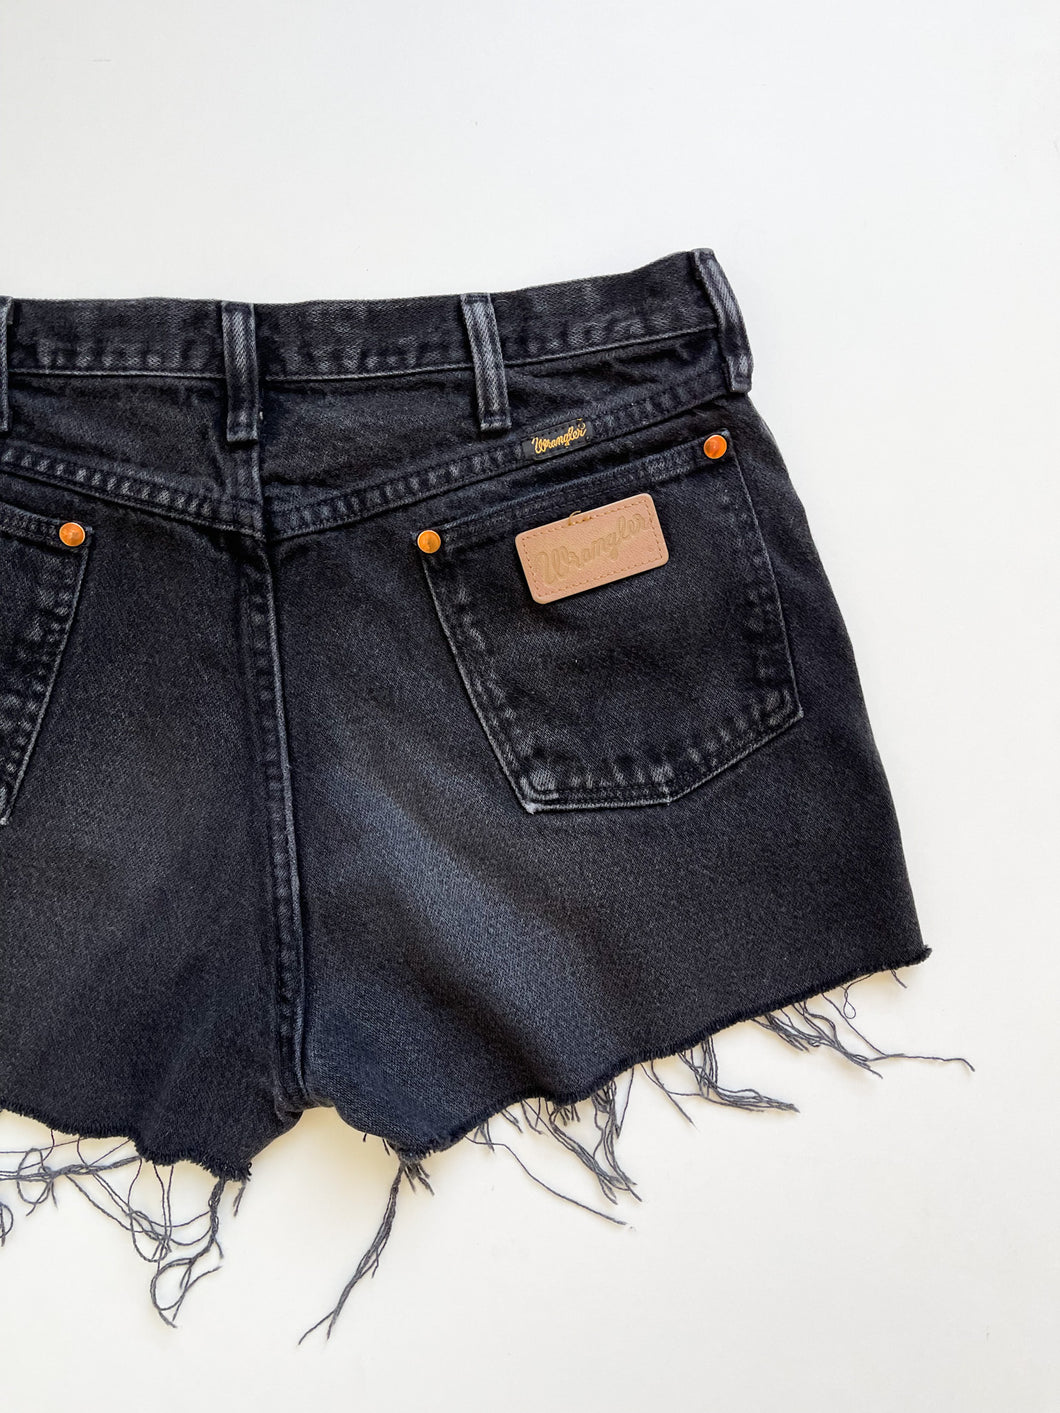 Vintage Wrangler Cutoff Shorts - 31.5